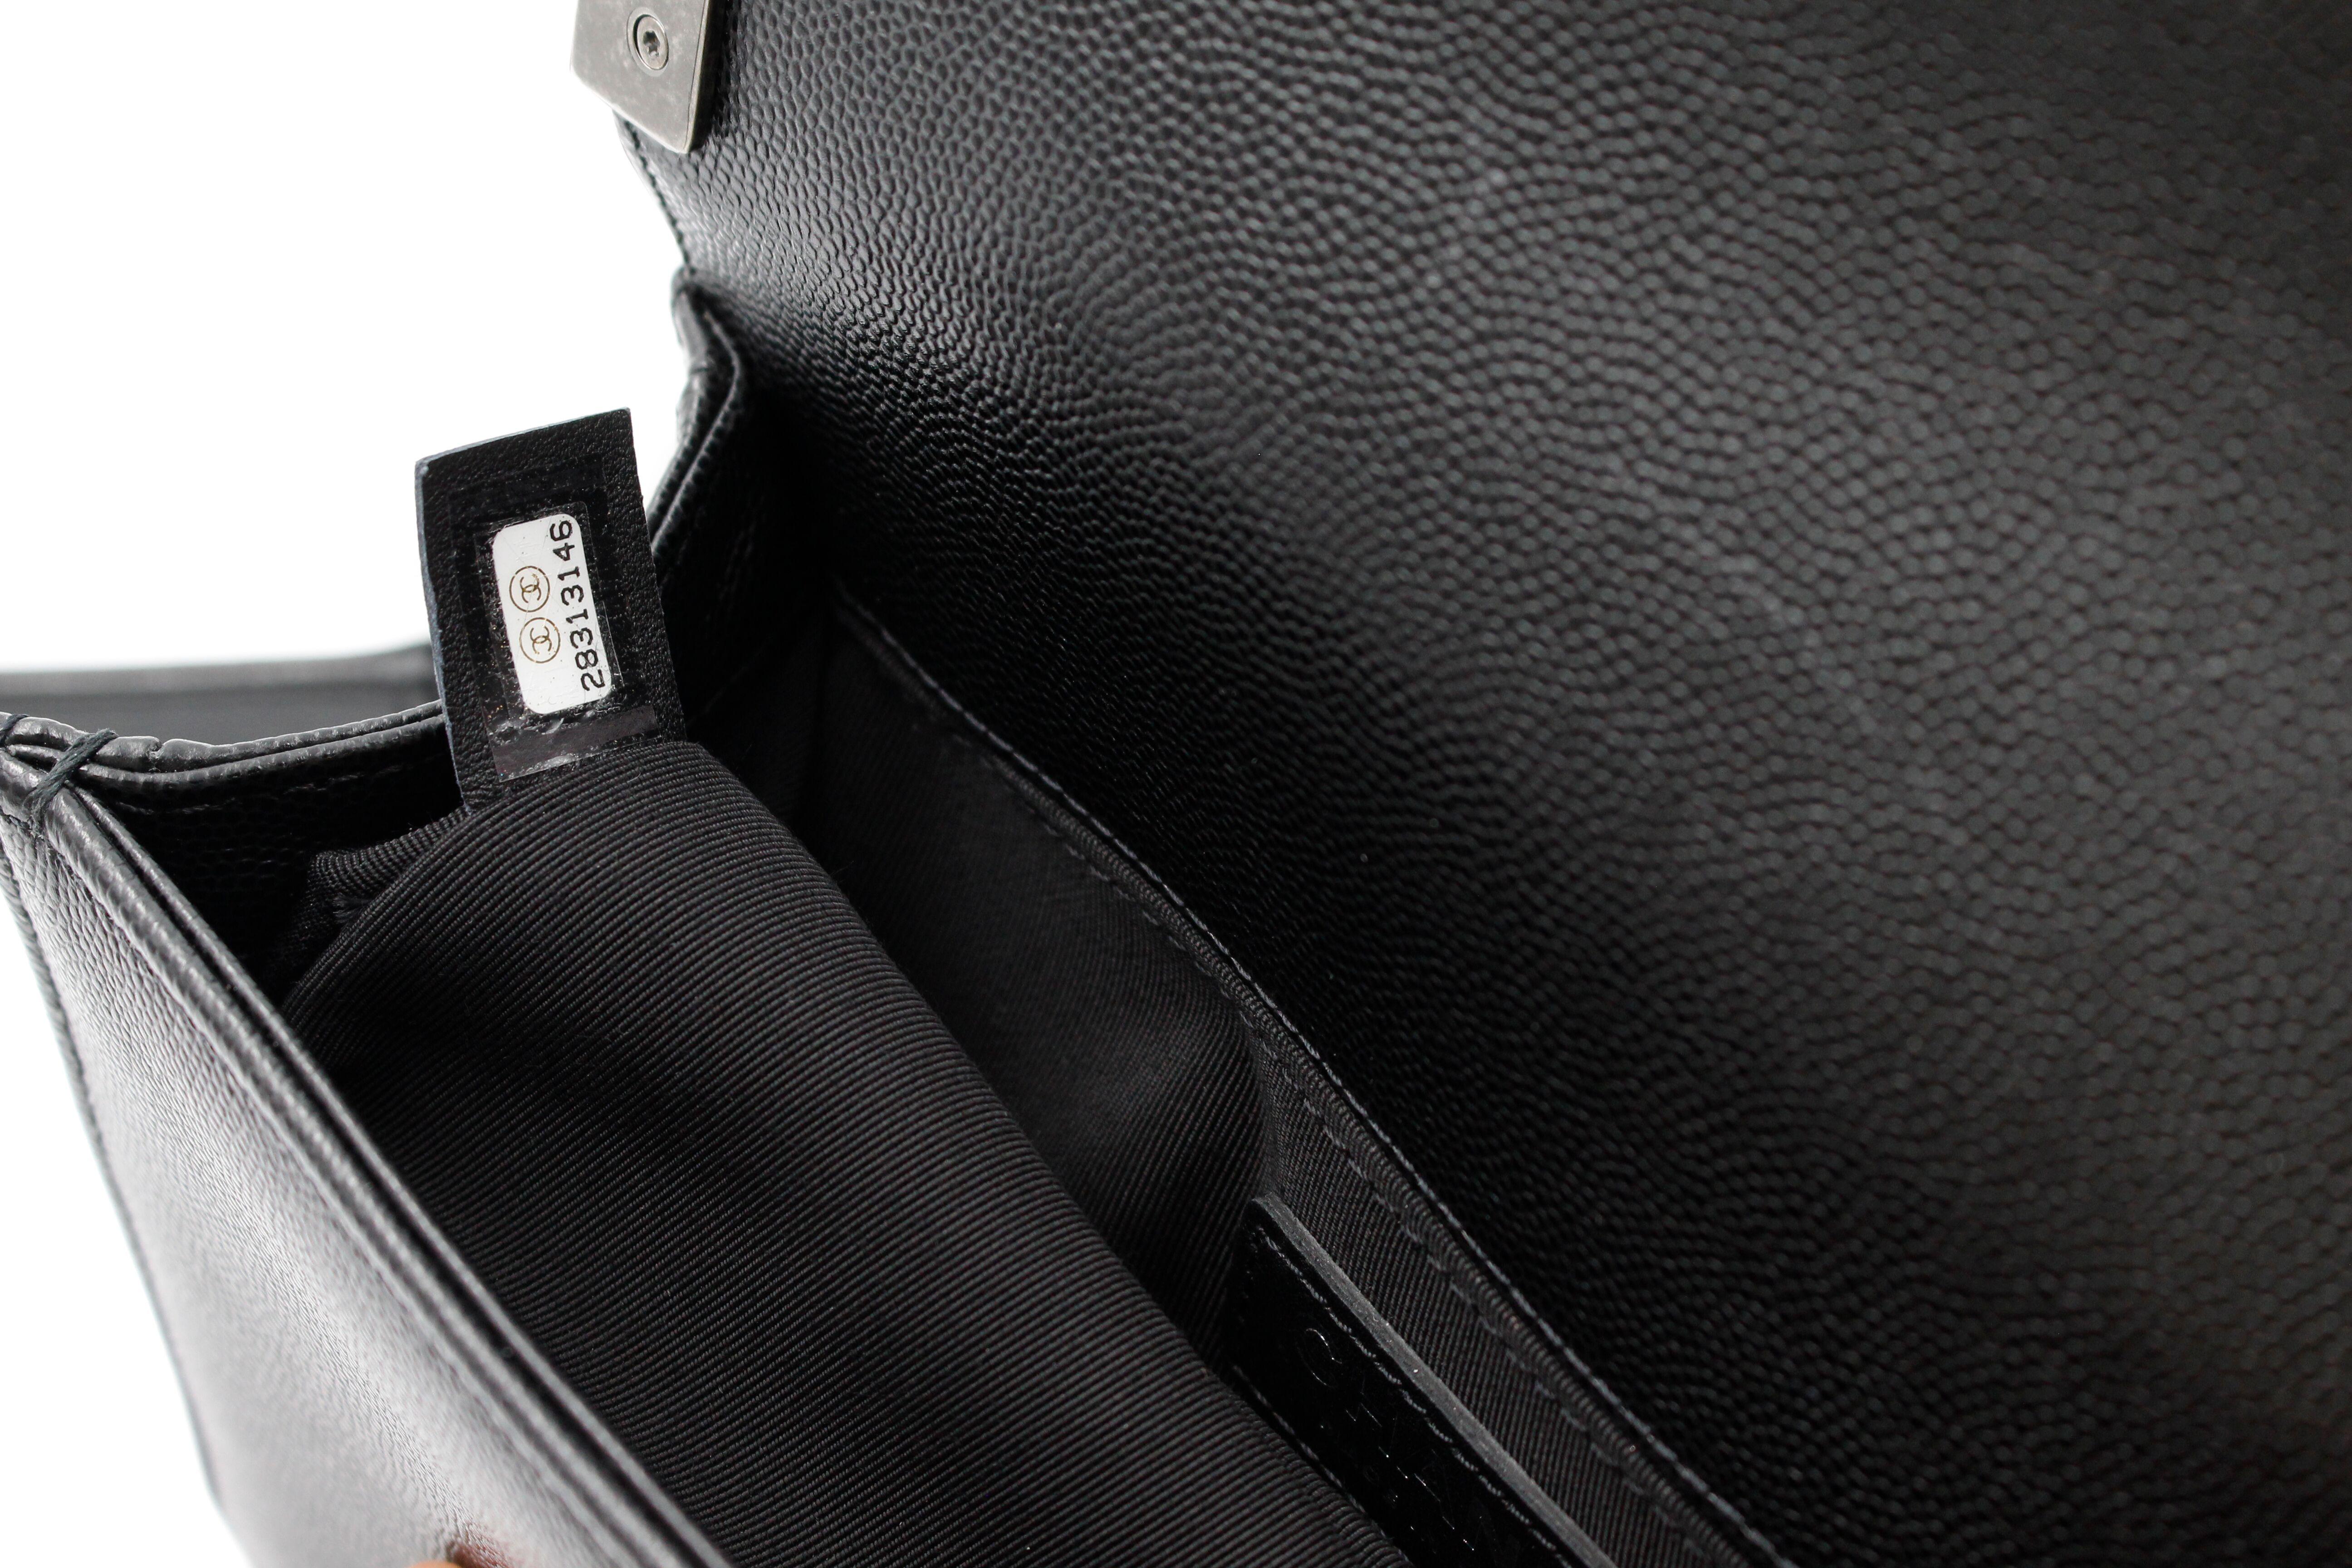 Chanel Black Caviar Leather & Ruthenium Finish Metal Small Boy Bag A67085 1